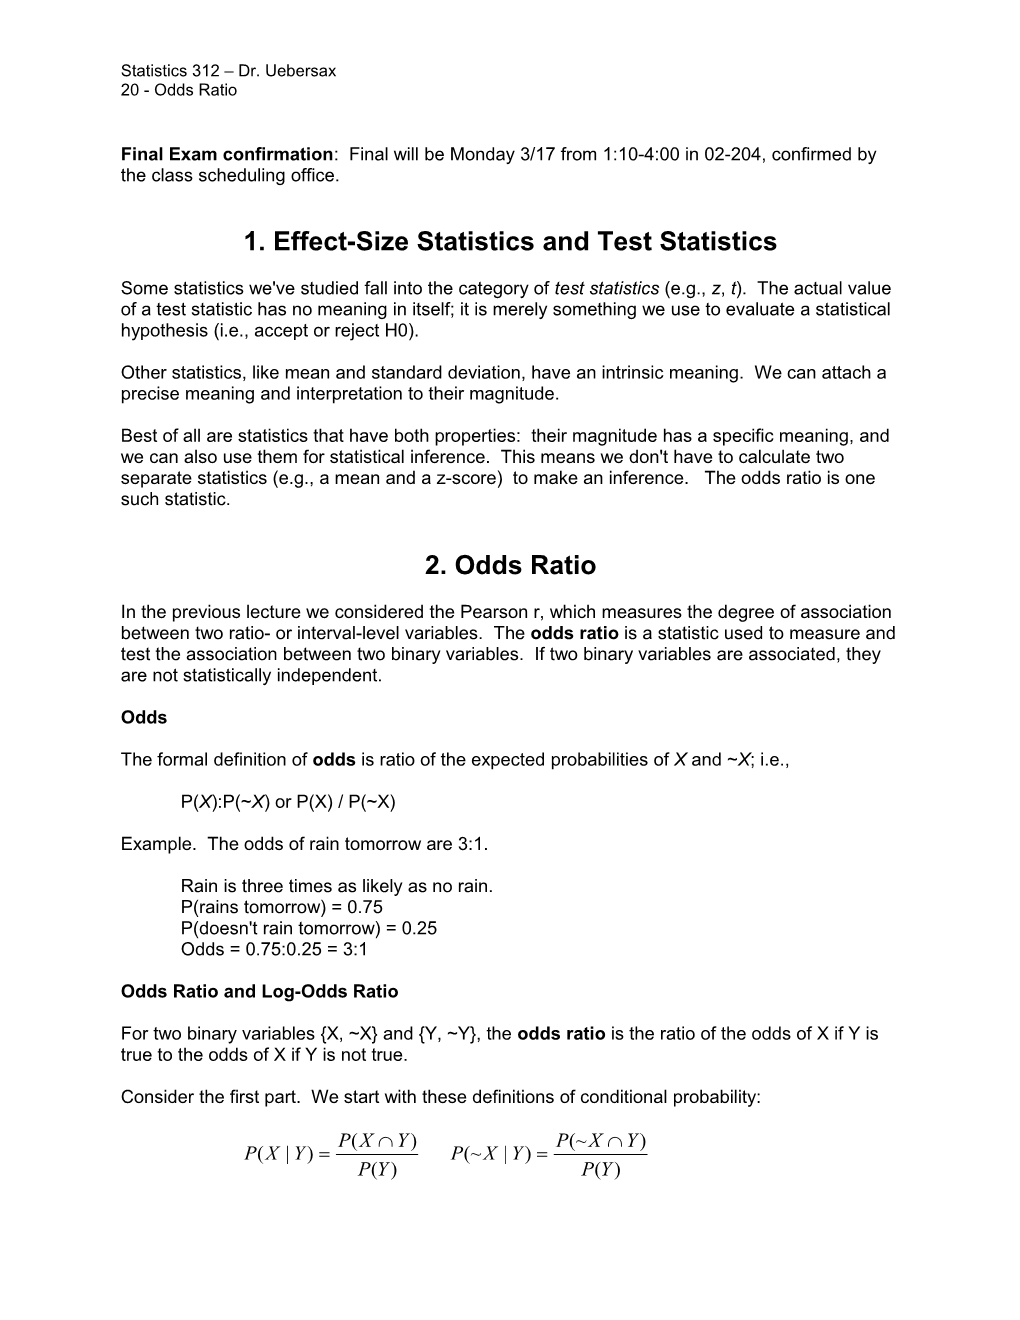 1. Effect-Size Statistics and Test Statistics